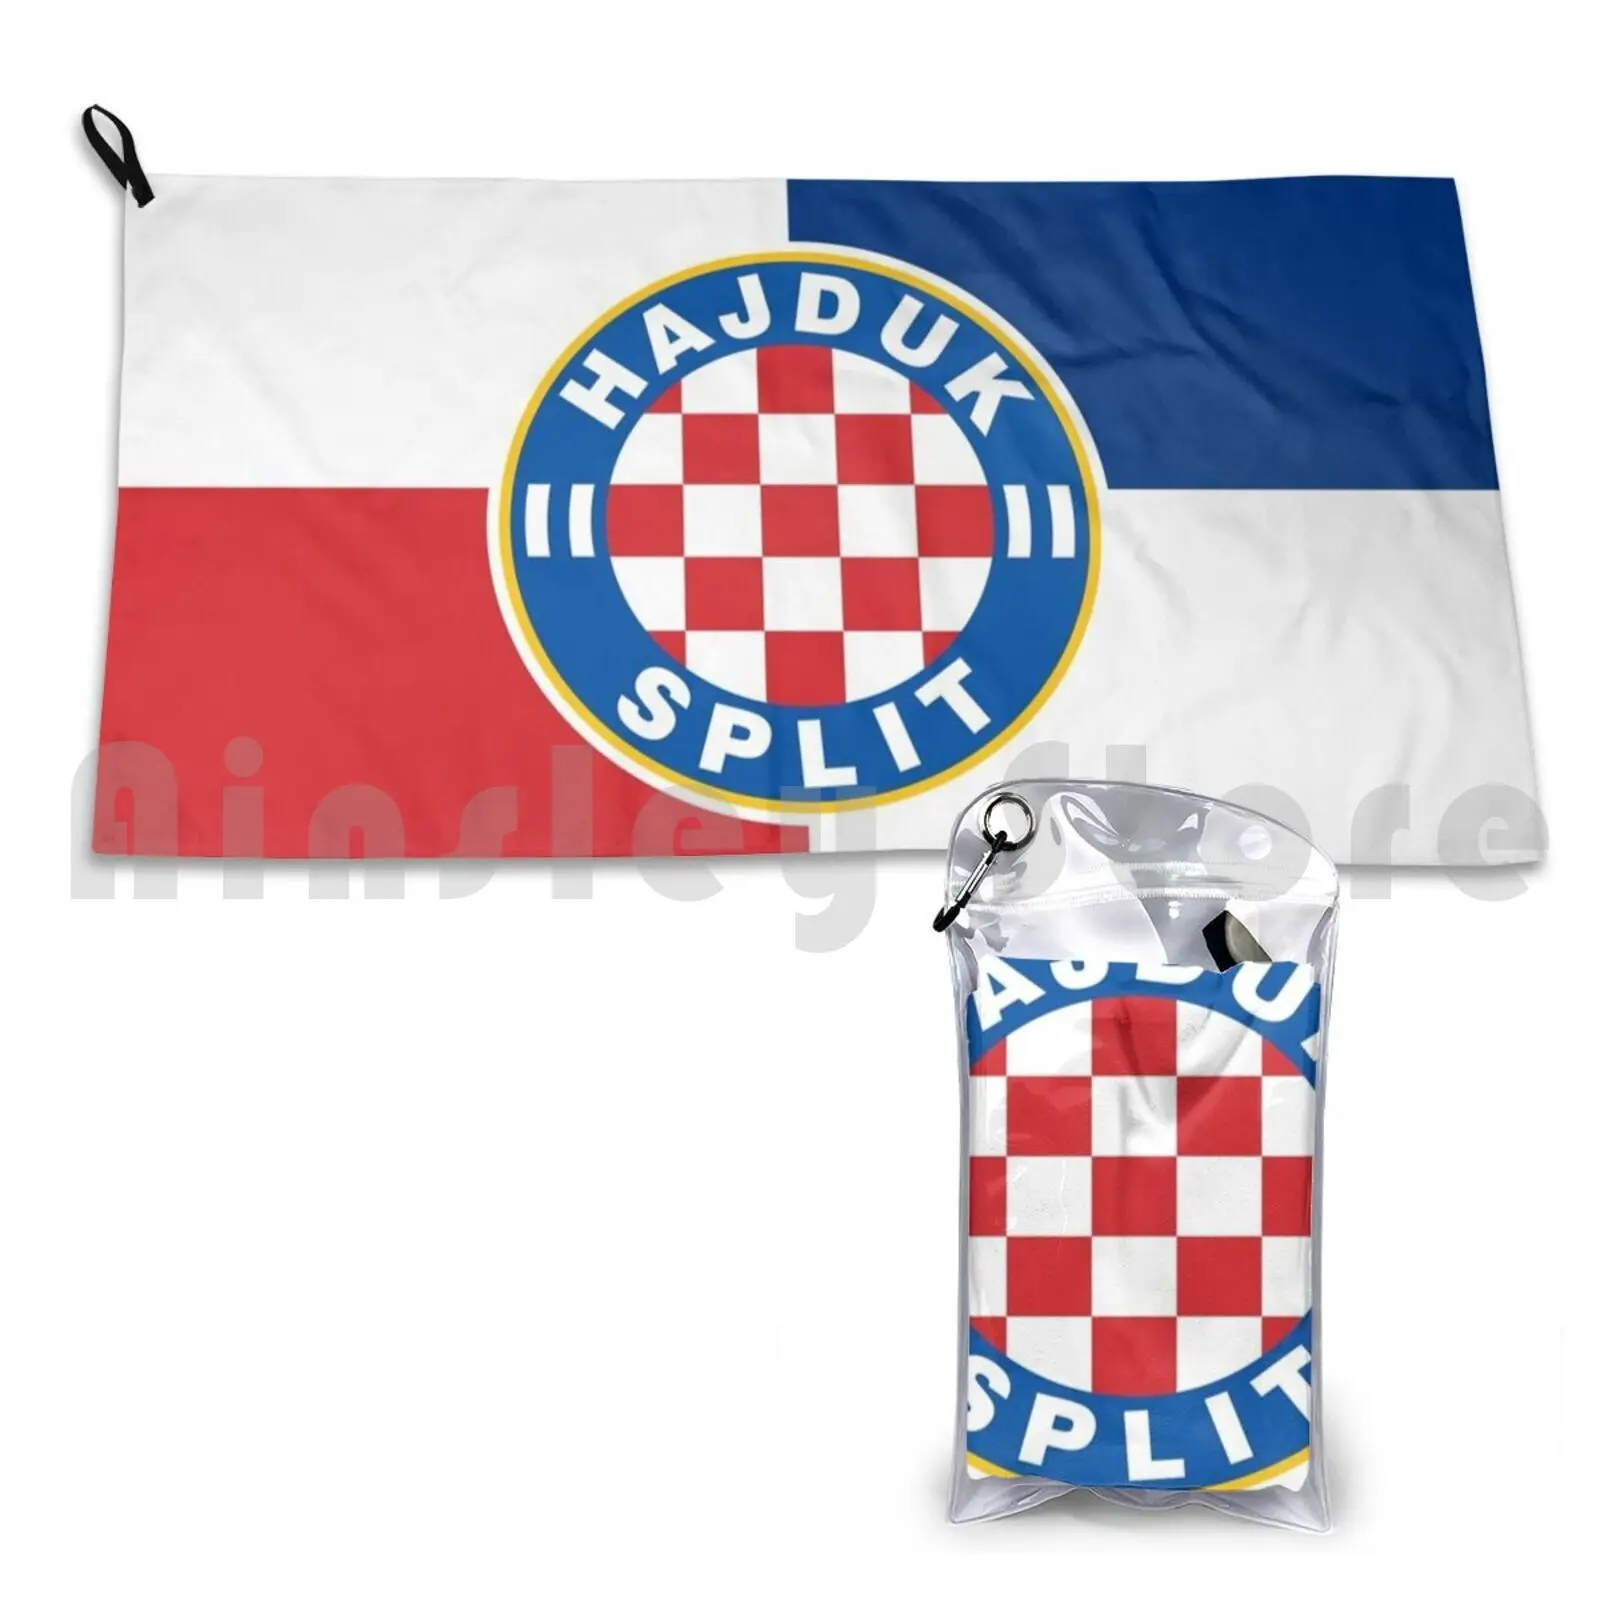 Capa De Almofada Estampada 50x75 Hajduk Split Croácia Split Minha Cor Desde  Que Eu Nasci, Split Da Croácia - Fronhas - AliExpress